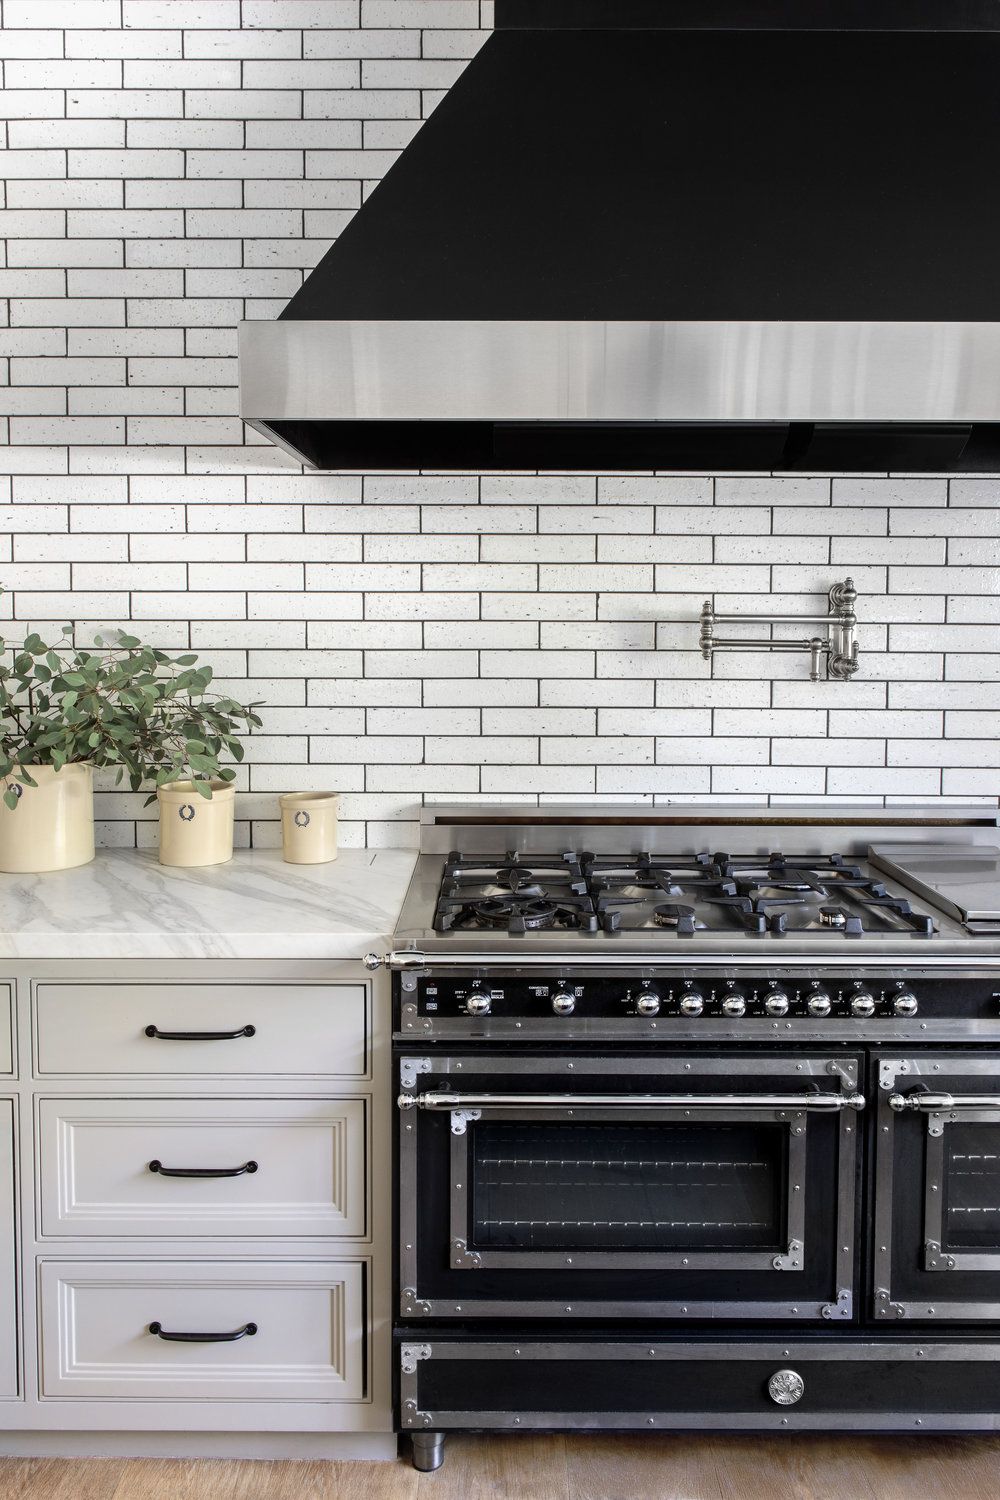 50 best kitchen backsplash ideas - tile designs for kitchen